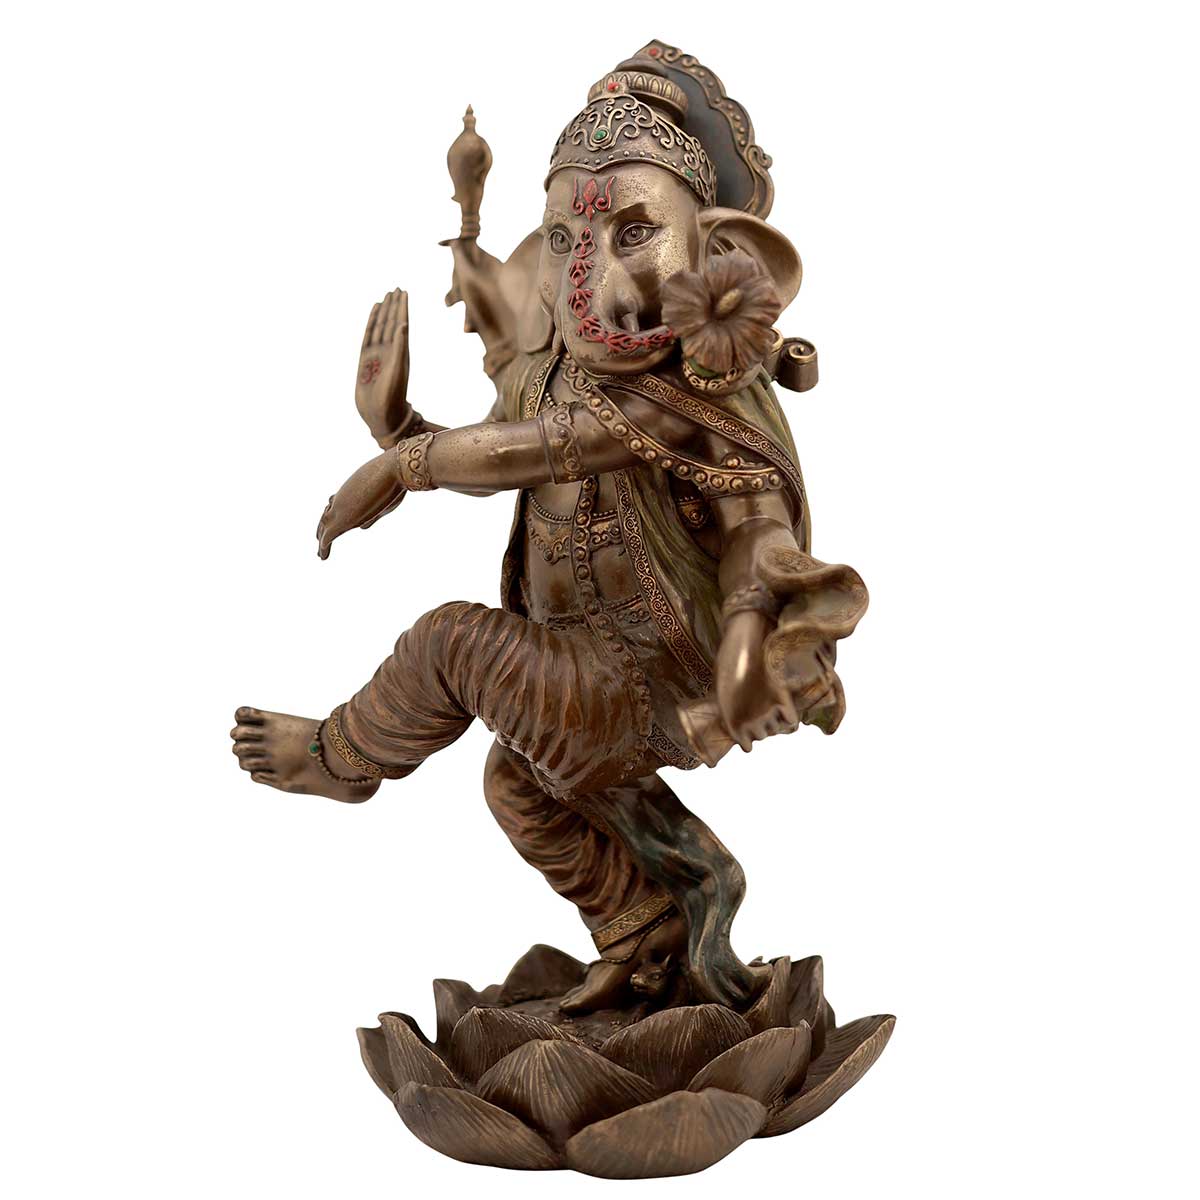 Lord Ganesha Nataraja pose idol made of Bonze Composite - 13 x 11 x 17.5 Inch, 3.9 Kg